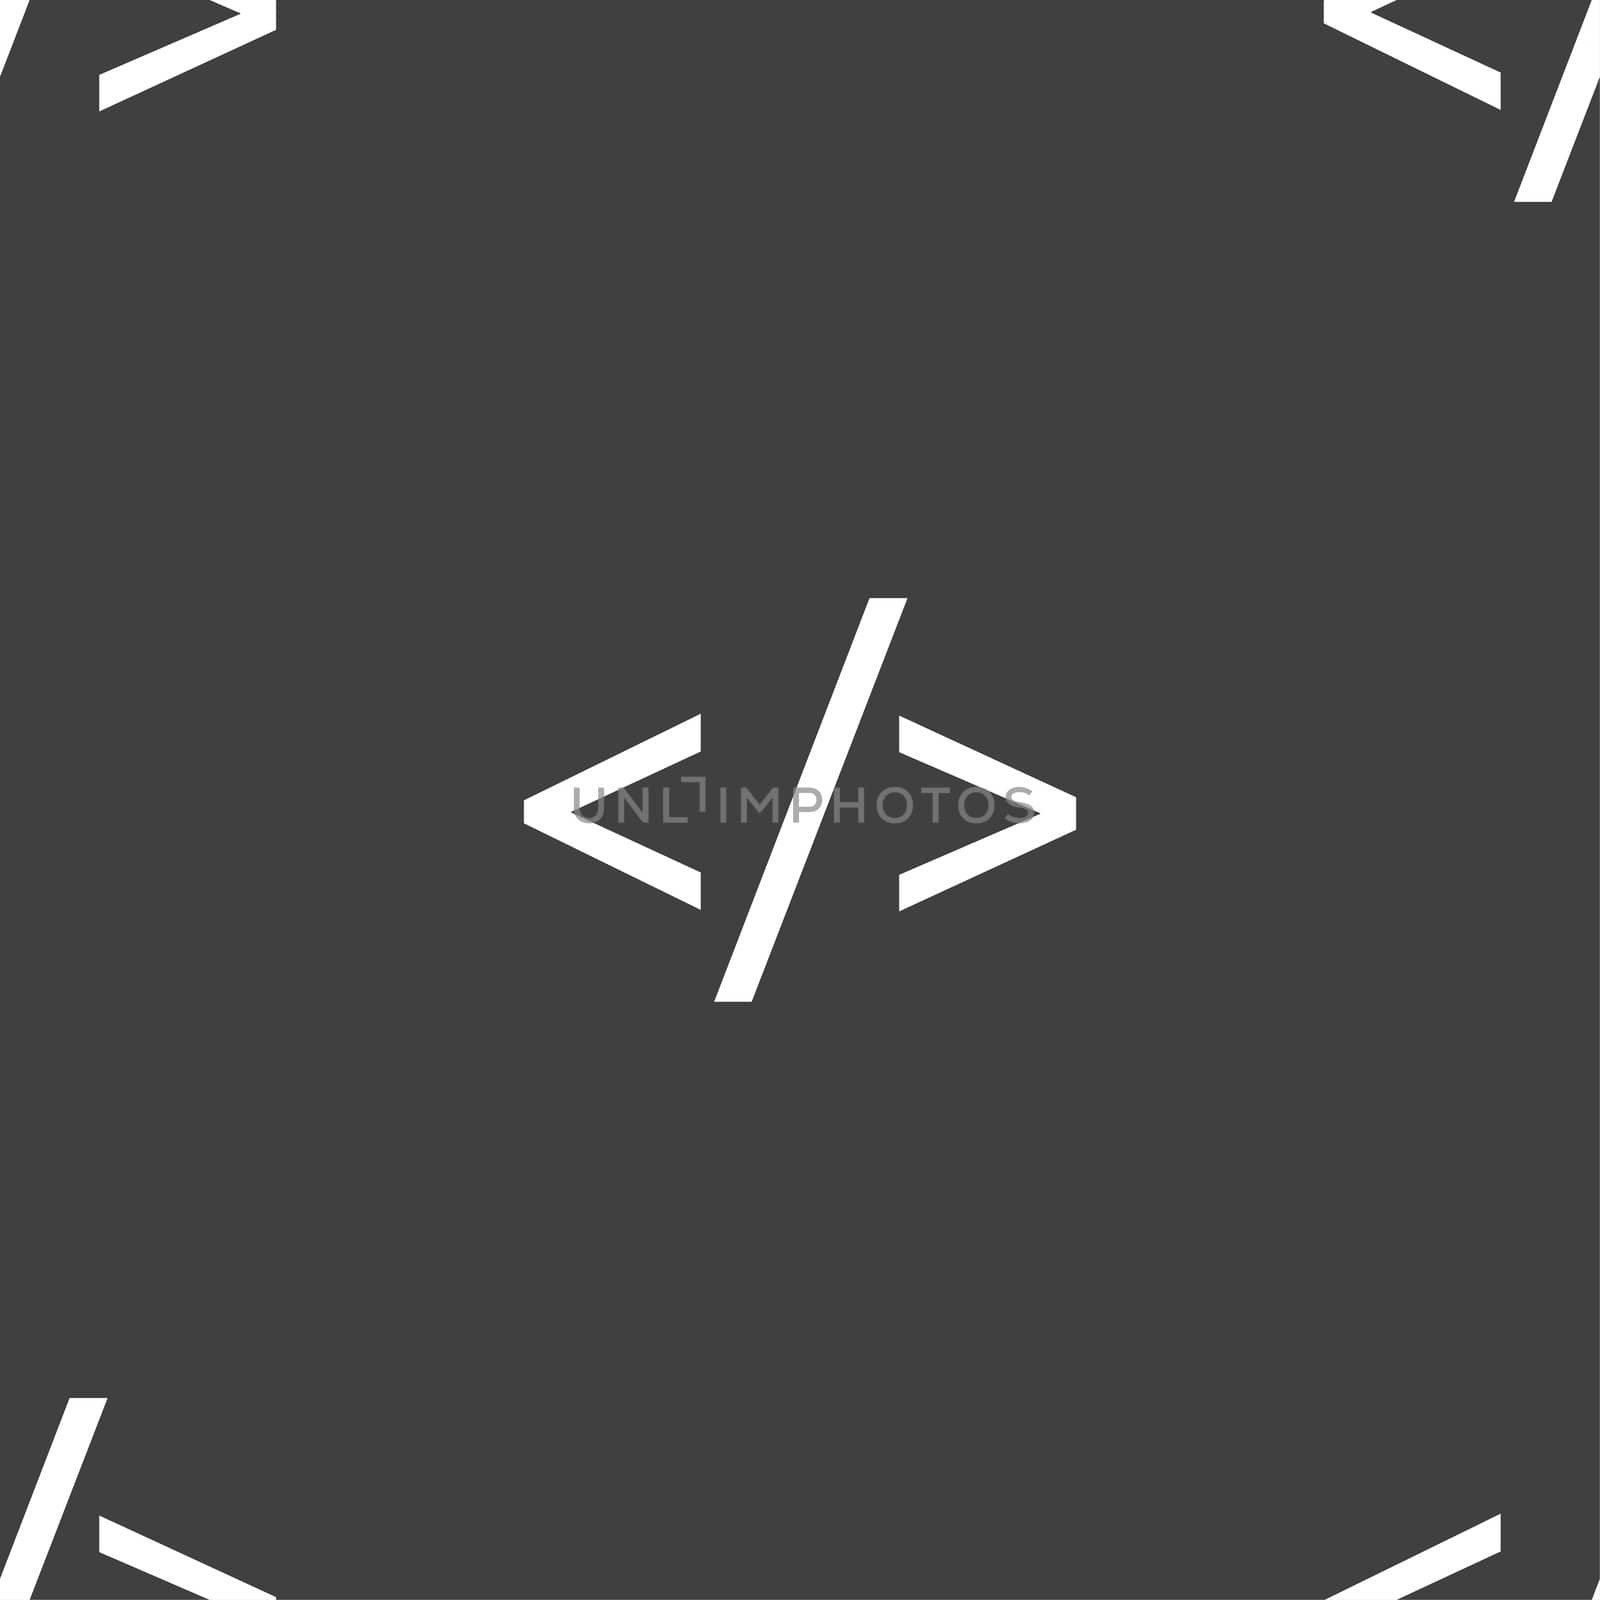 Code sign icon. Programming language symbol. Seamless pattern on a gray background. illustration